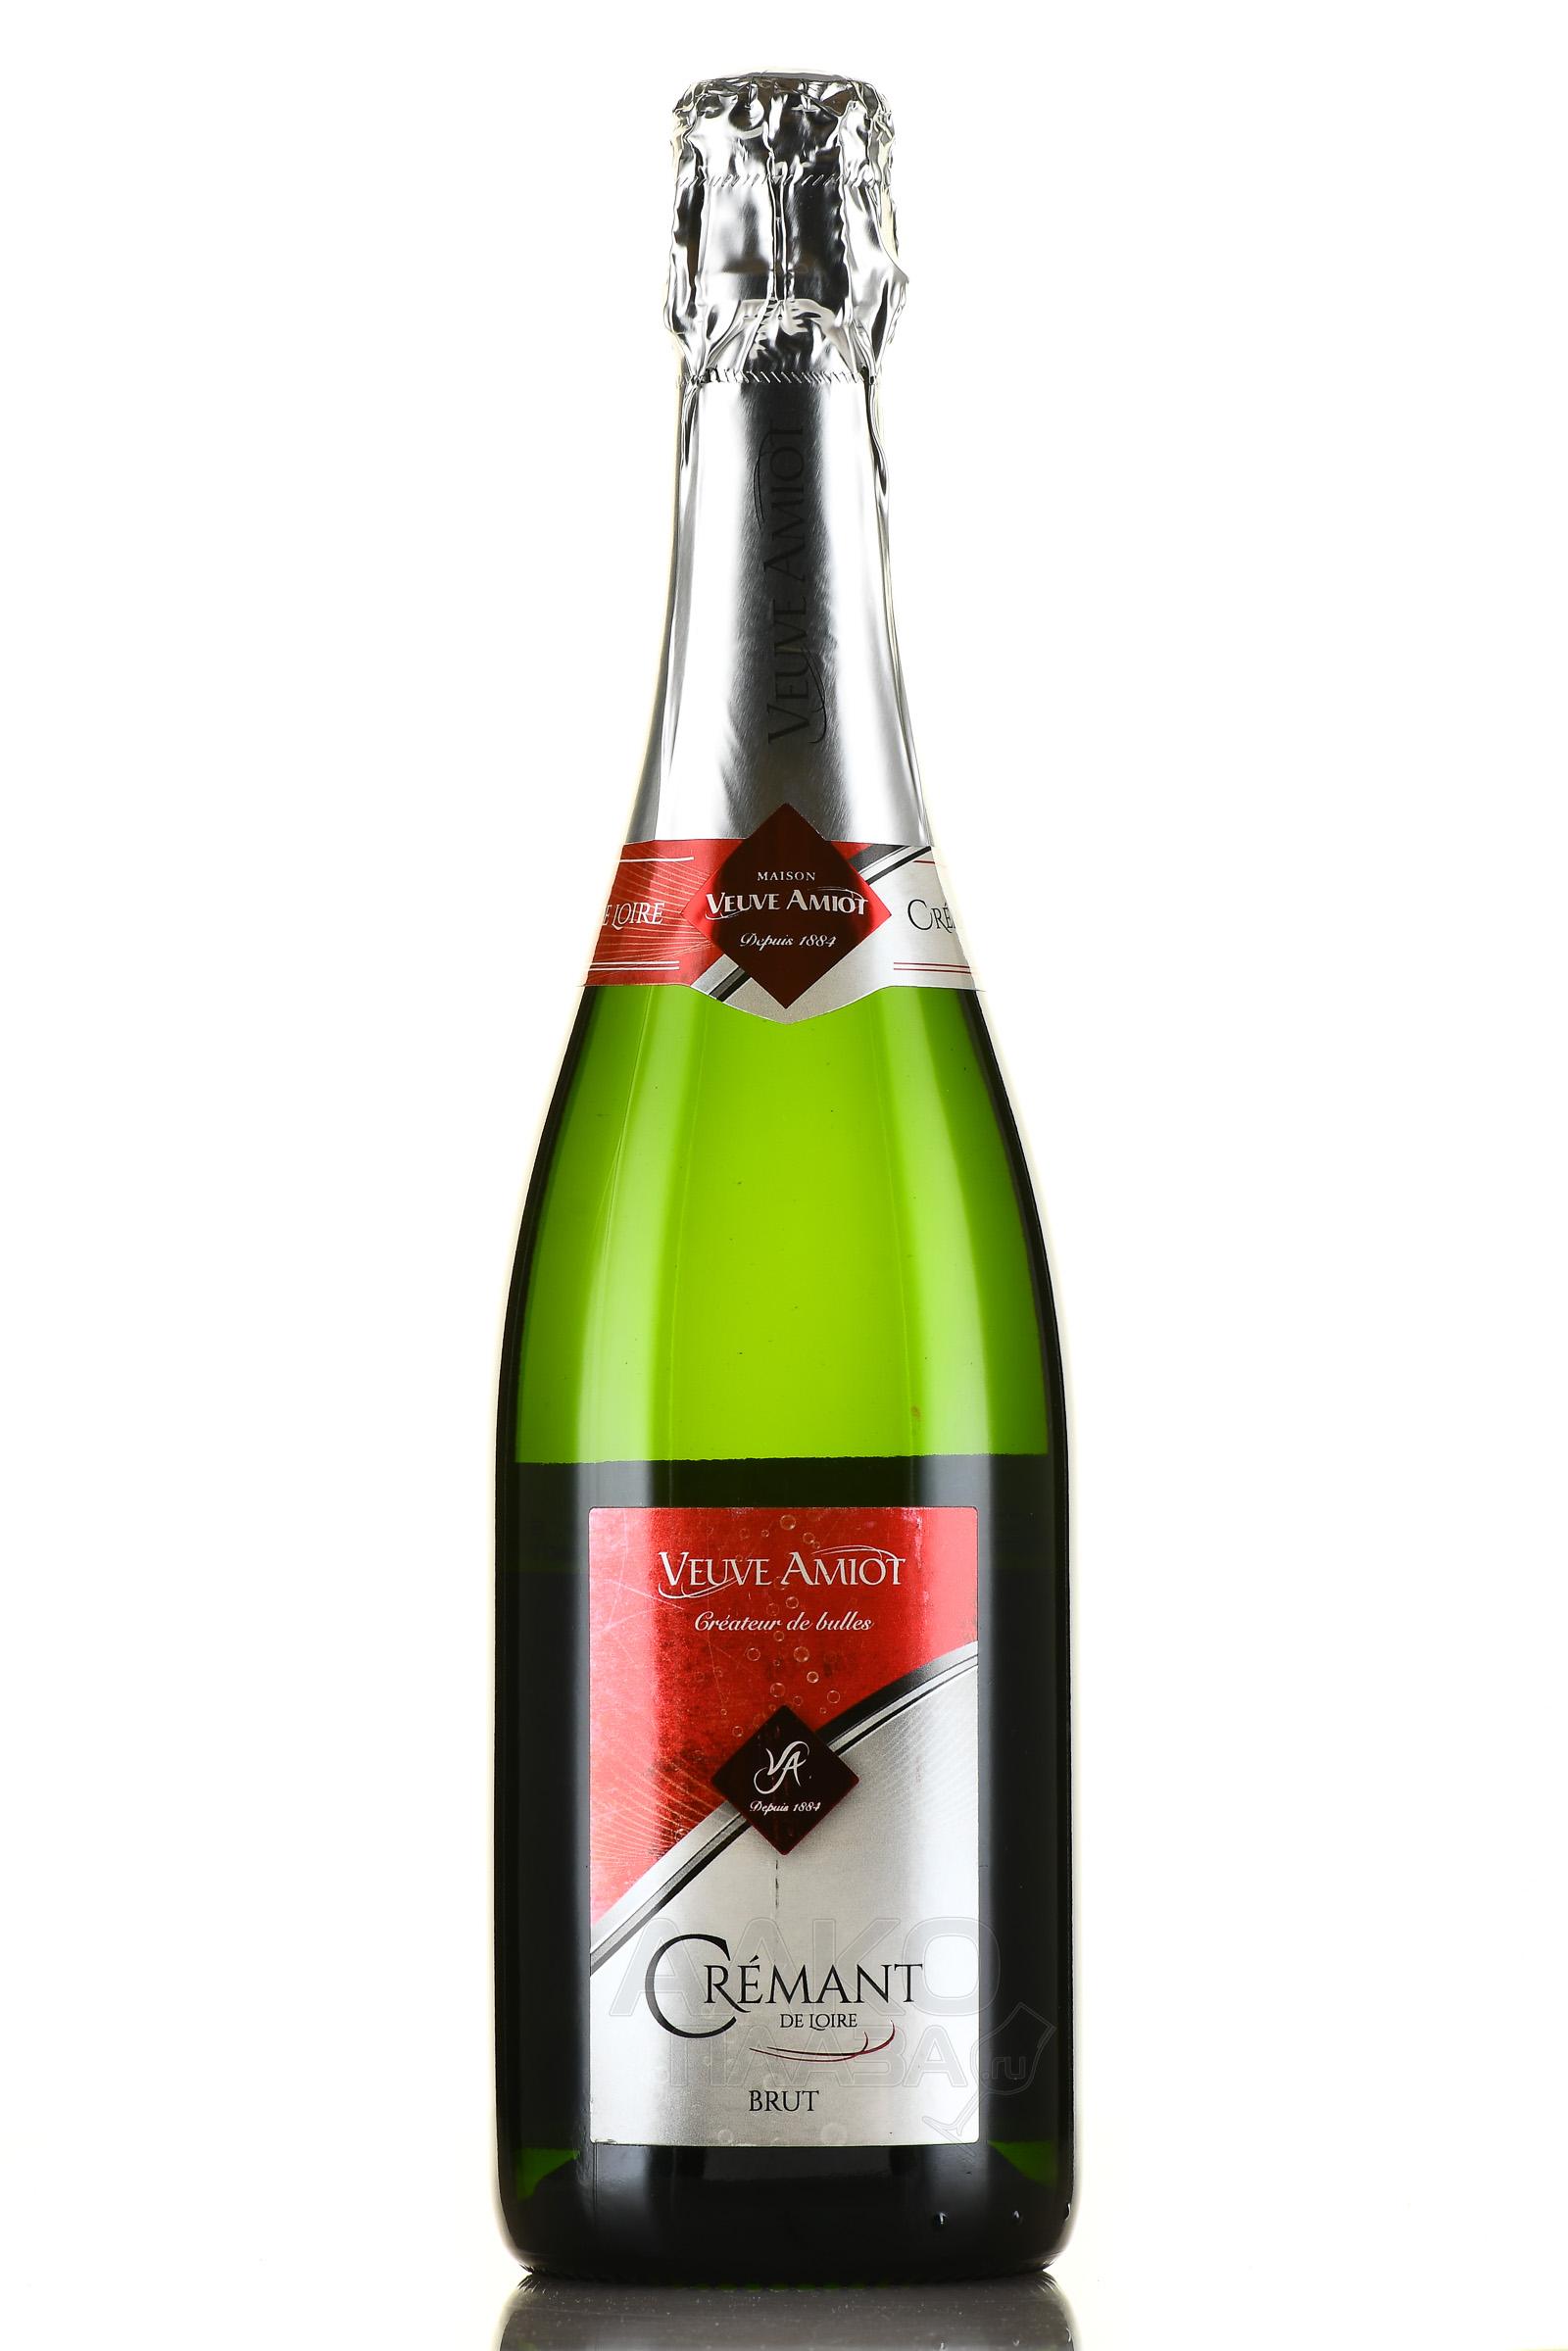 Veuve Amiot Cremant de Loire AOC Brut Blanc - вино игристое Вев Амийо Креман де Луар АОС Брют Блан 0.75 л